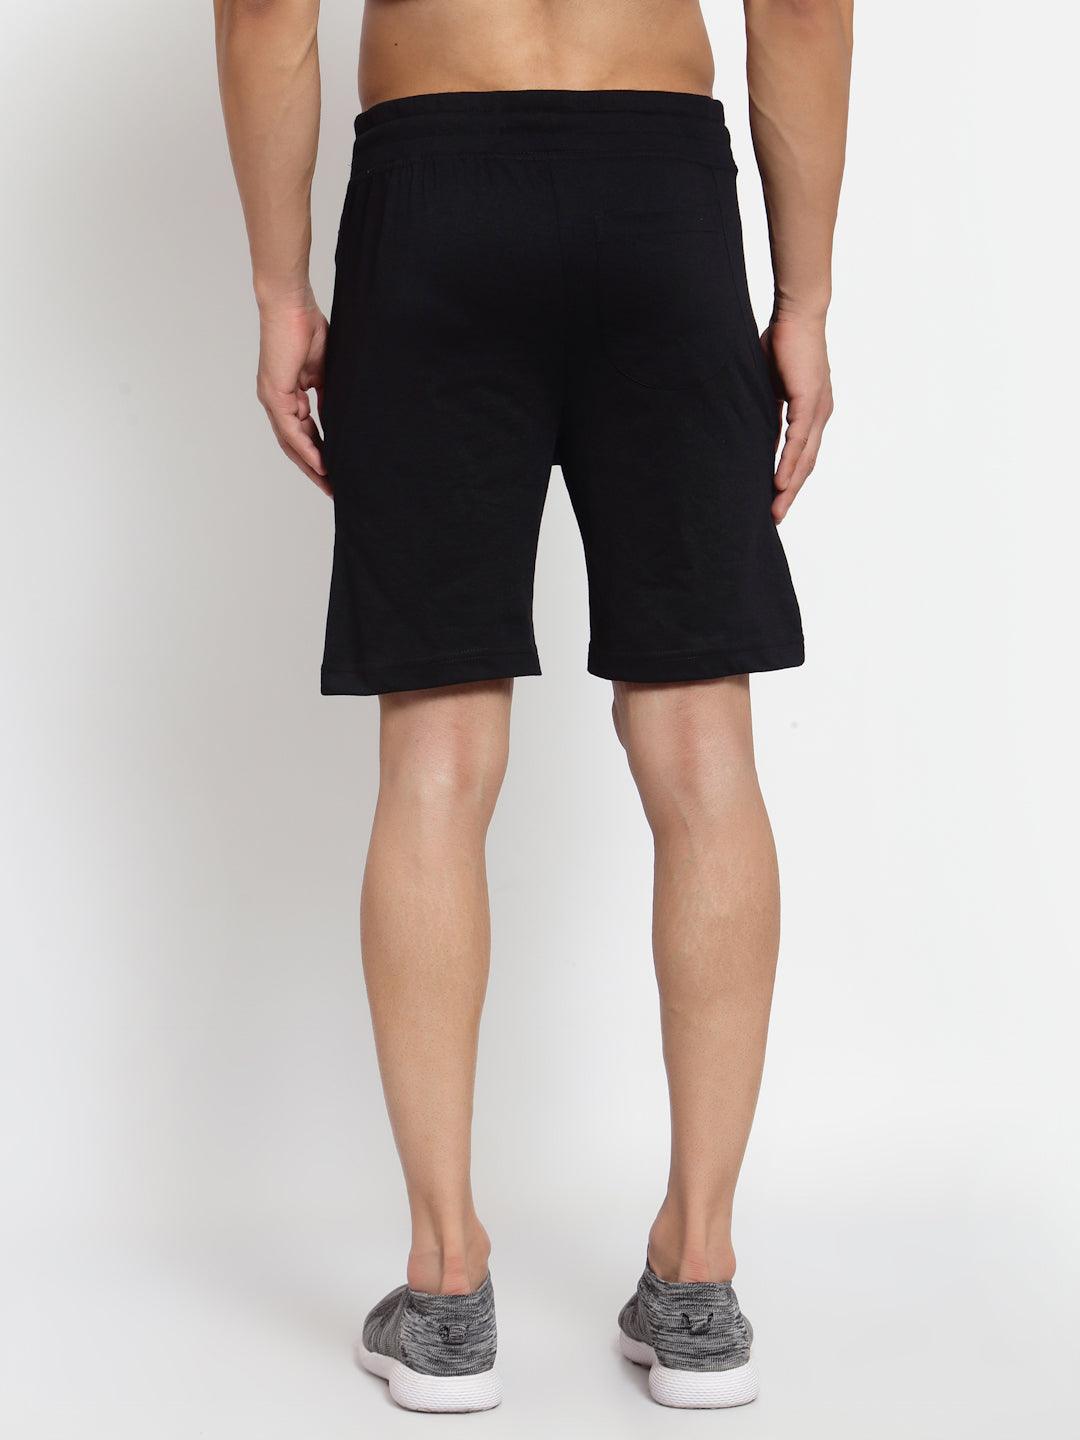 Sporto Men's Lounge Shorts - Black